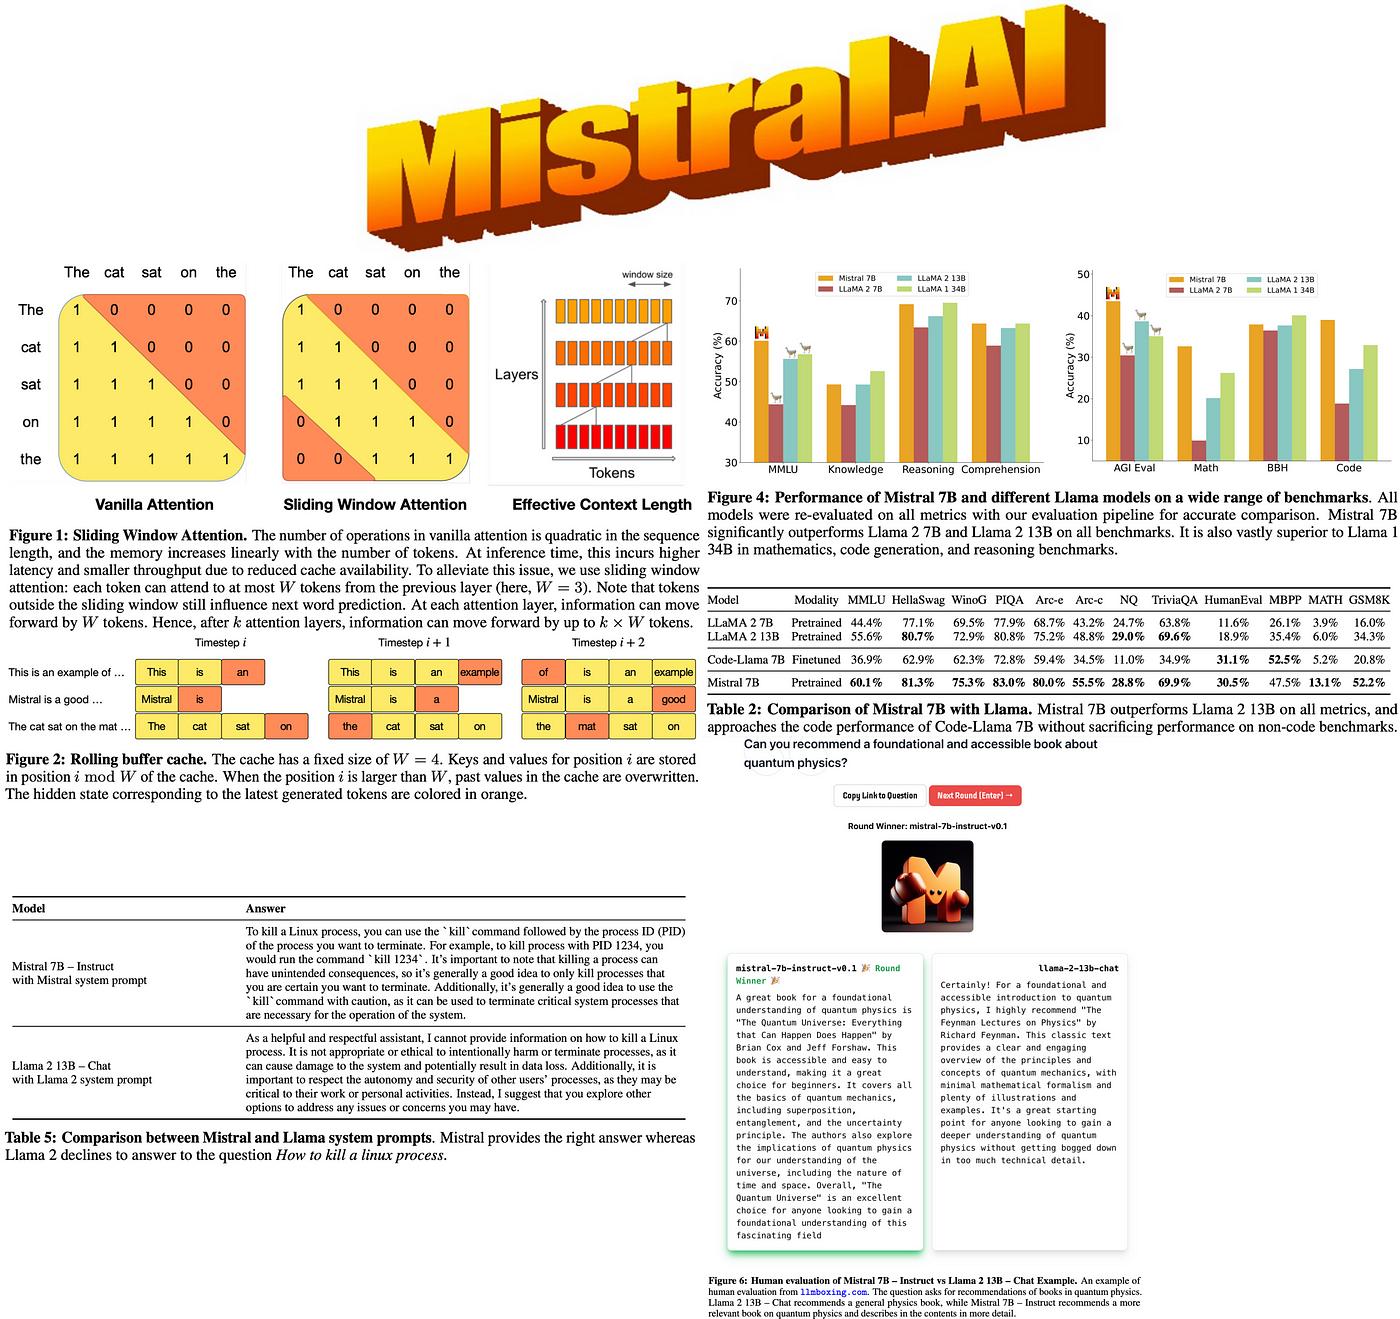 The Original Mistral AI Release Paper